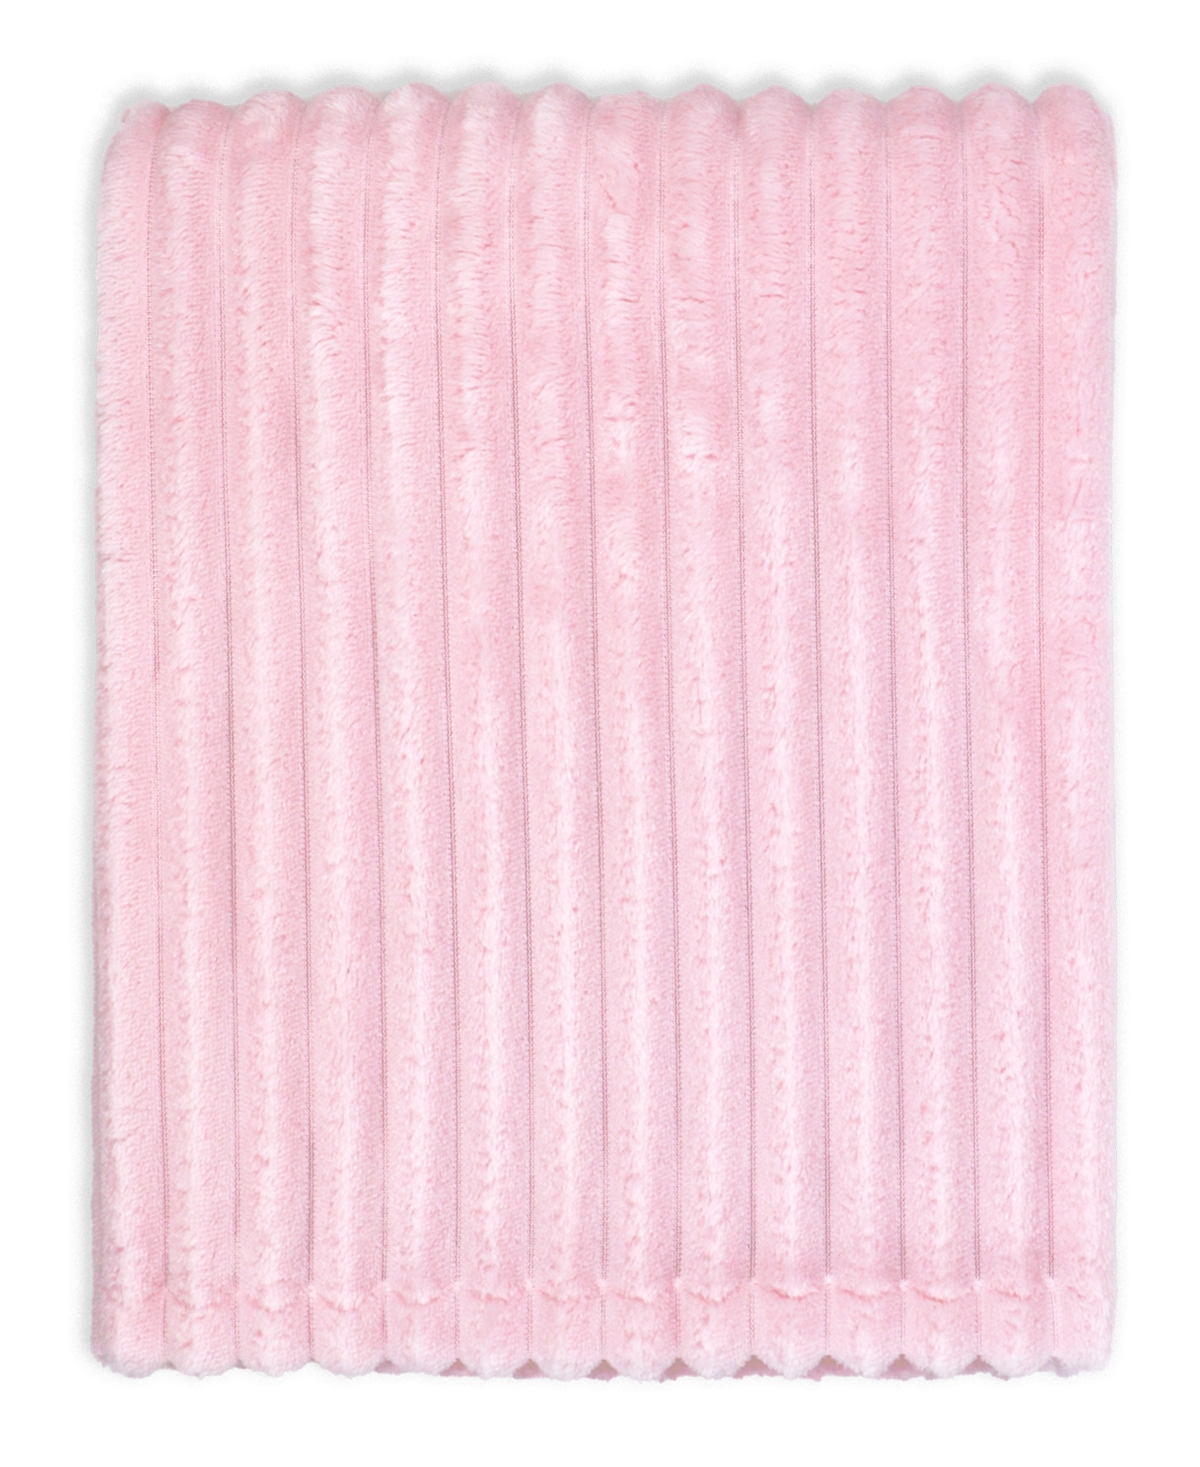 Shop Tendertyme Baby Girls Sweet Dreams Baby Blankets, 5 Piece Gift Set In Pink